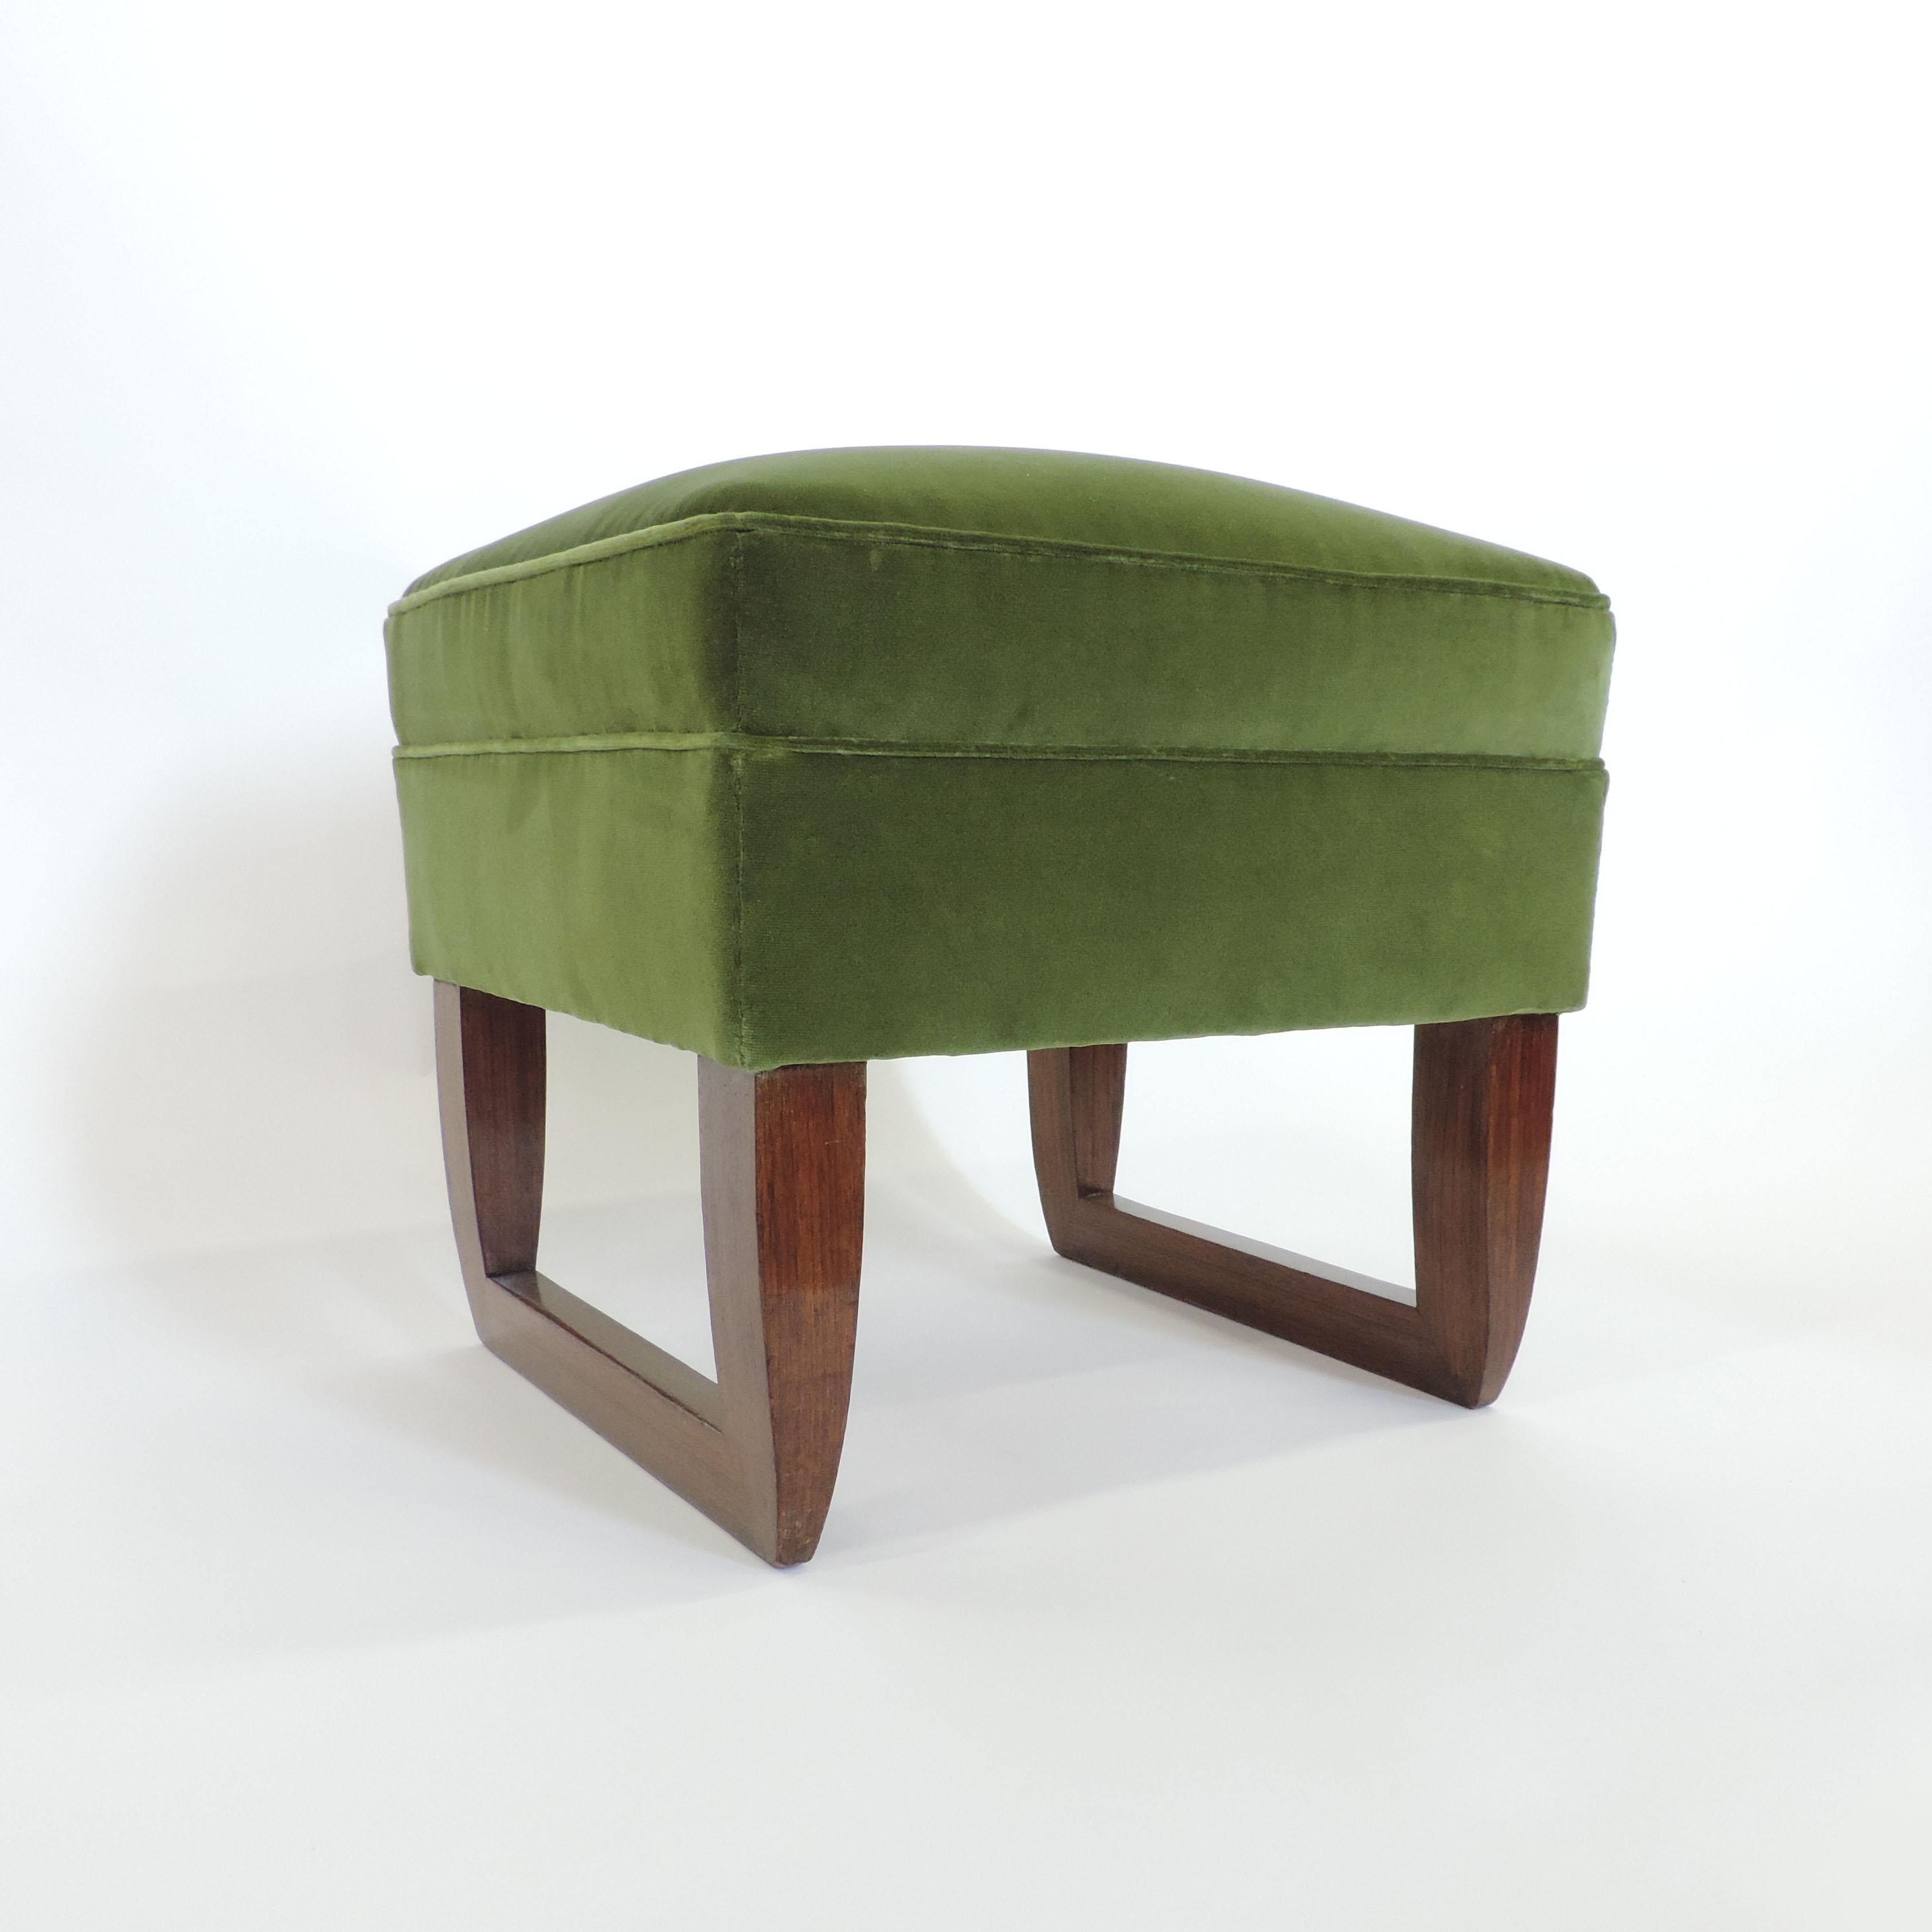 Upholstery 1930s Italian Pair of Modernist Stools